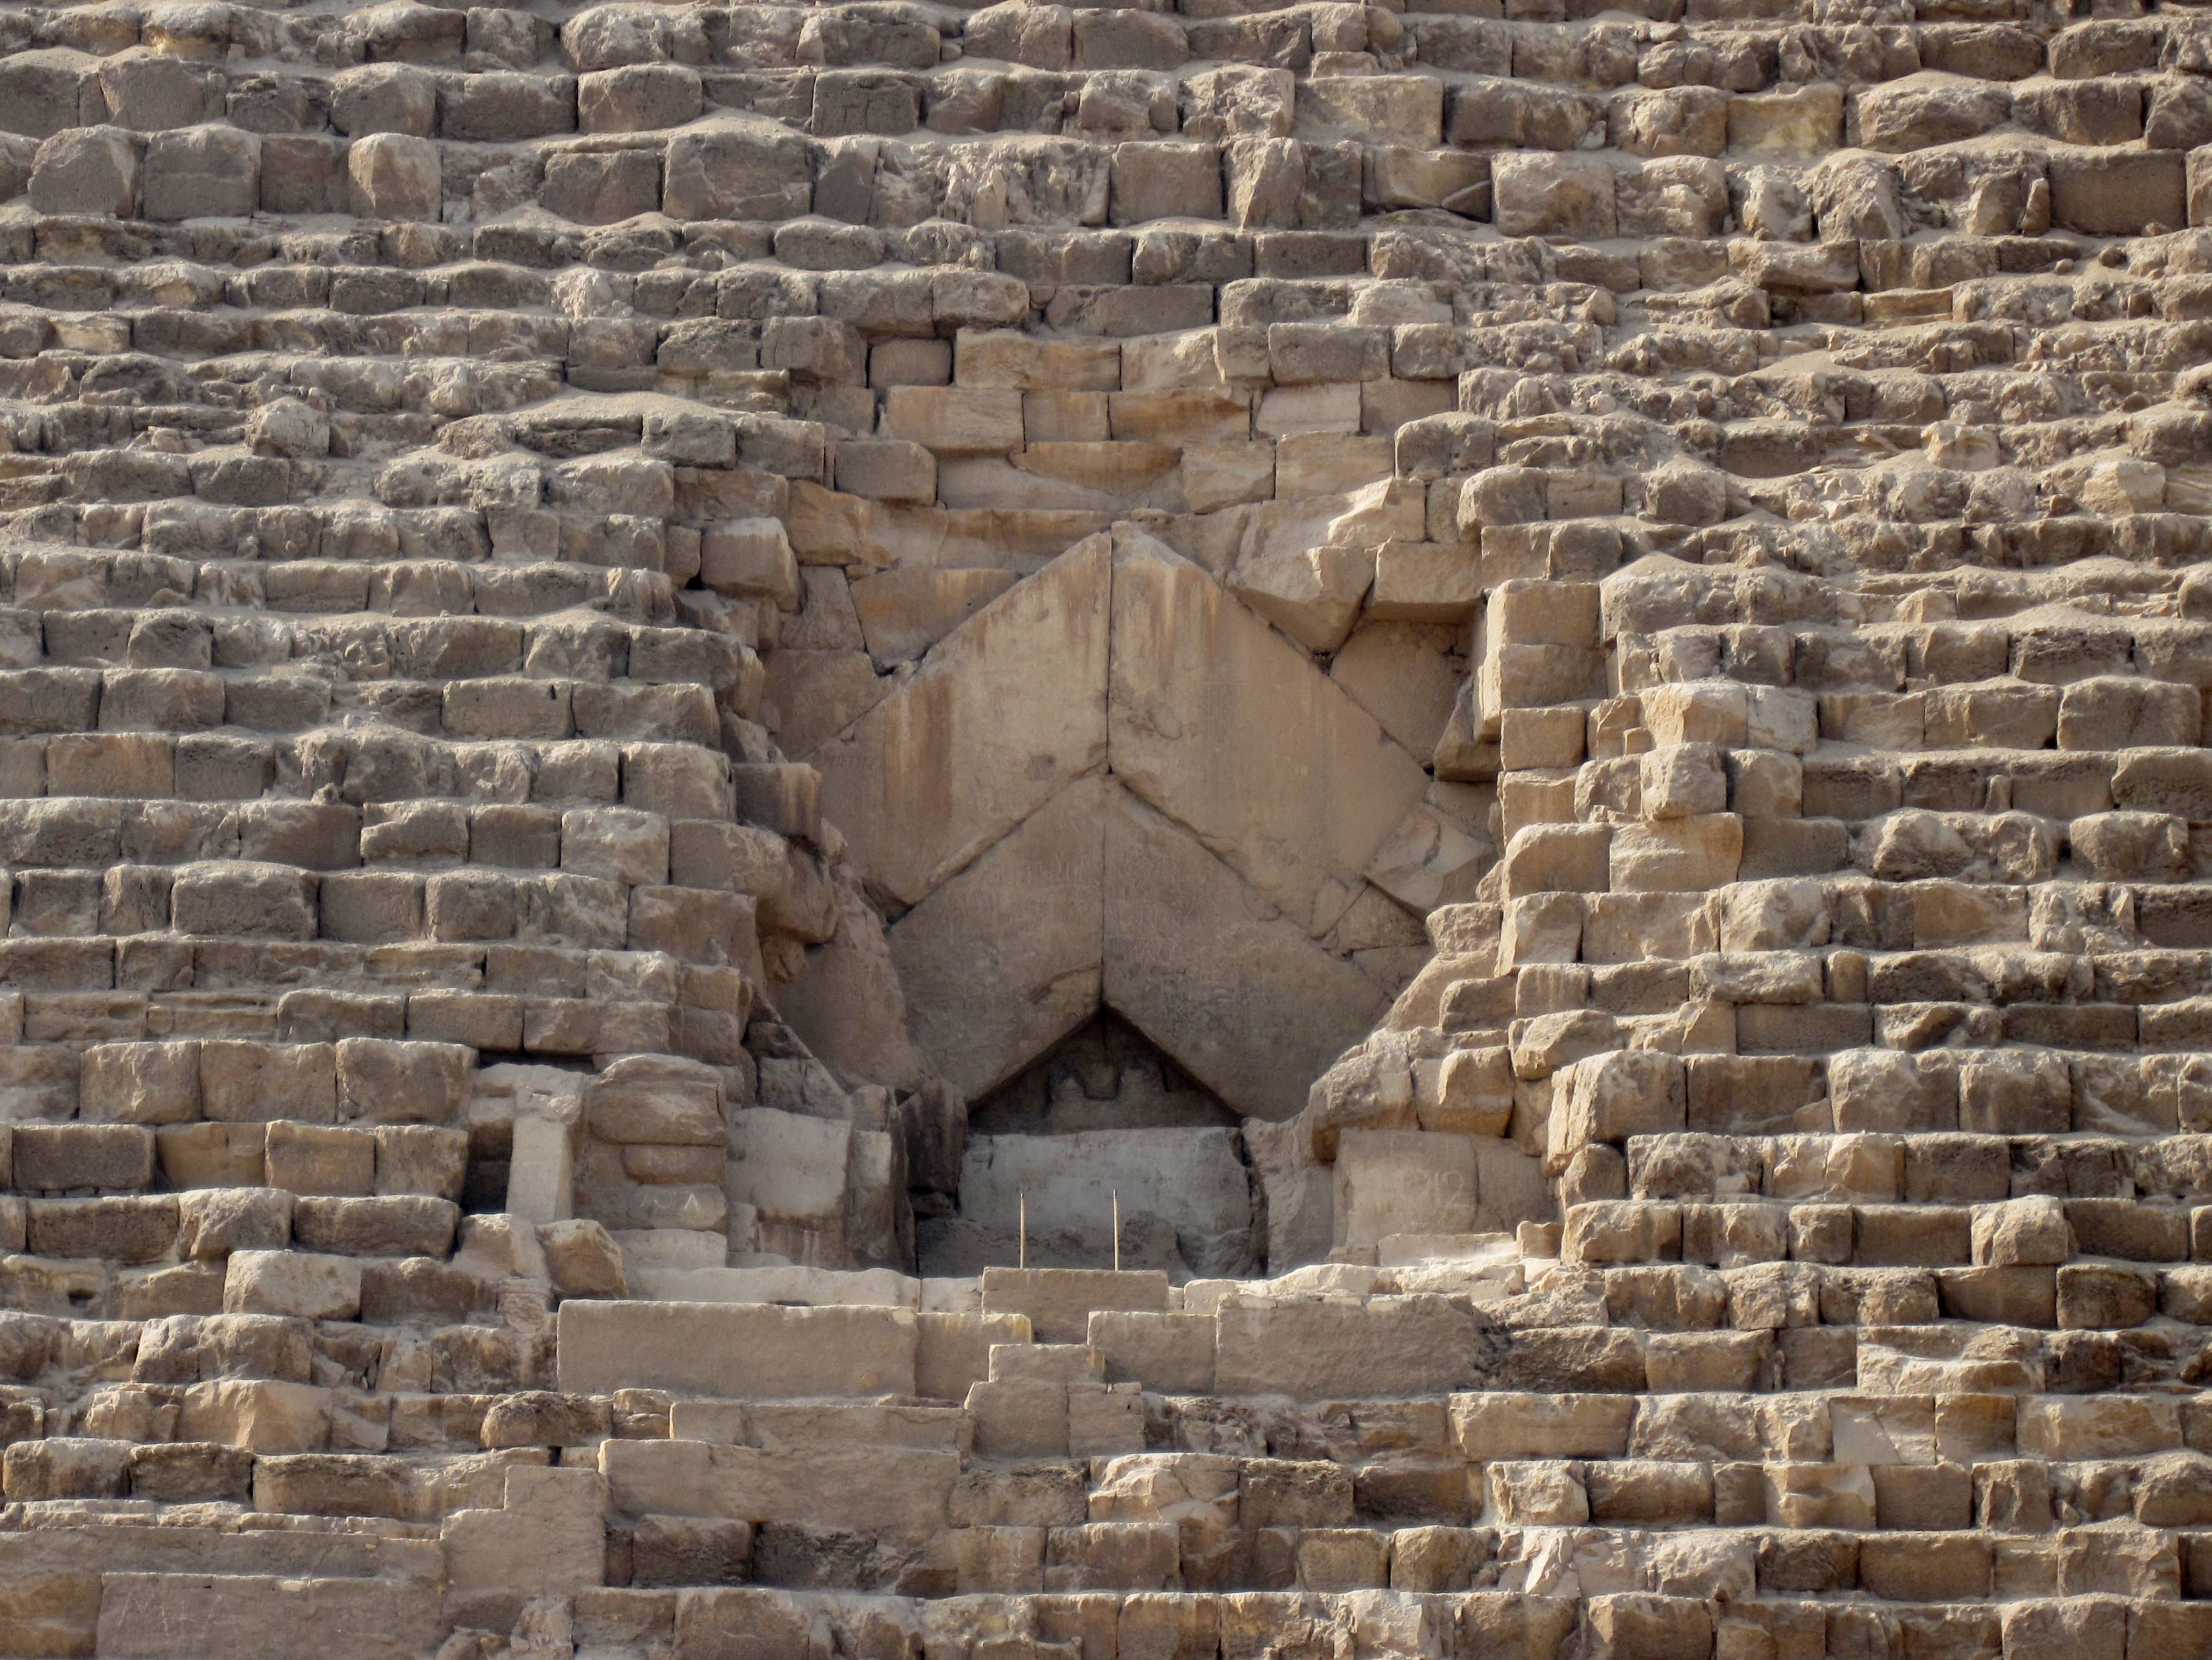 Great Pyramid of Giza - World History Encyclopedia